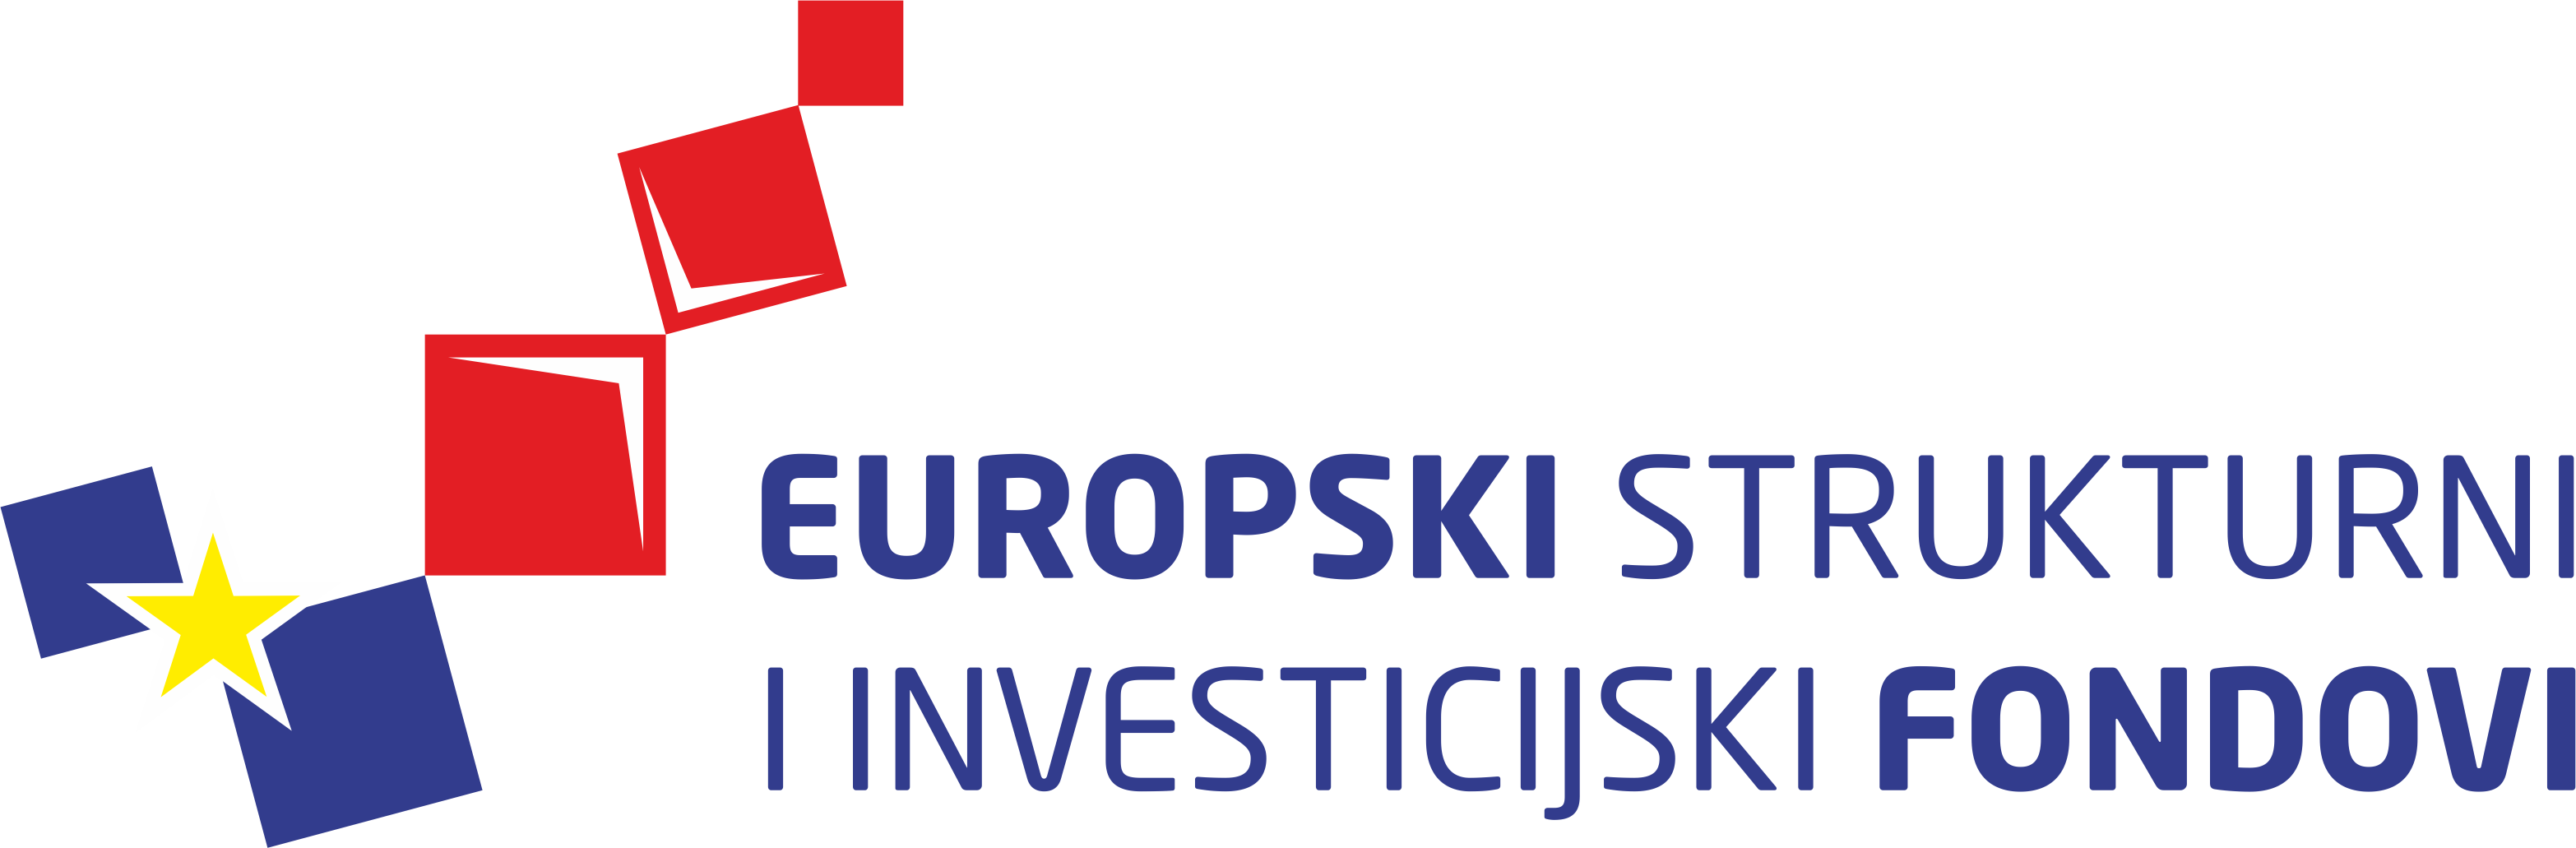 mob eu-logo-image 1